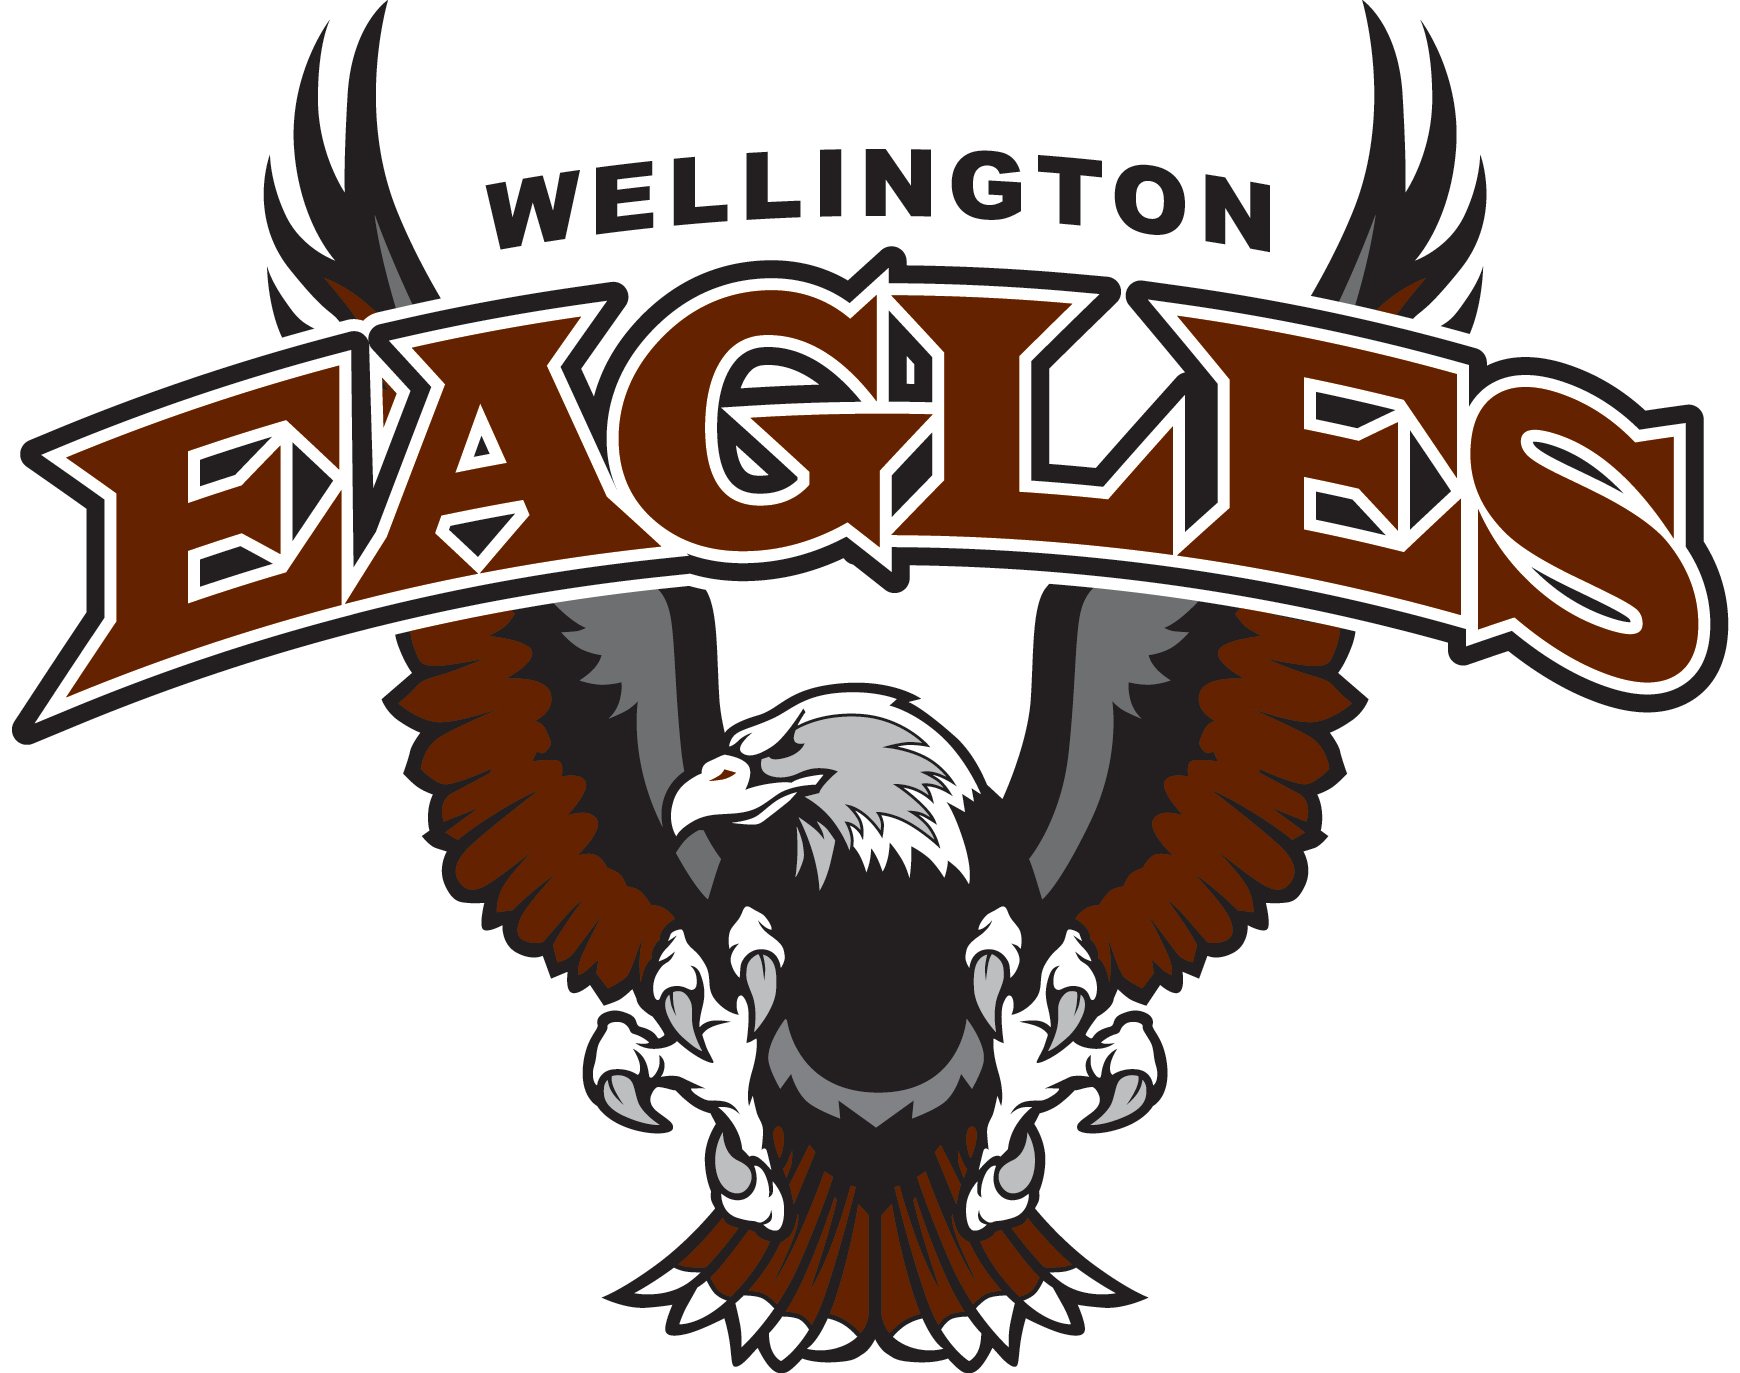 Wellington Eagles